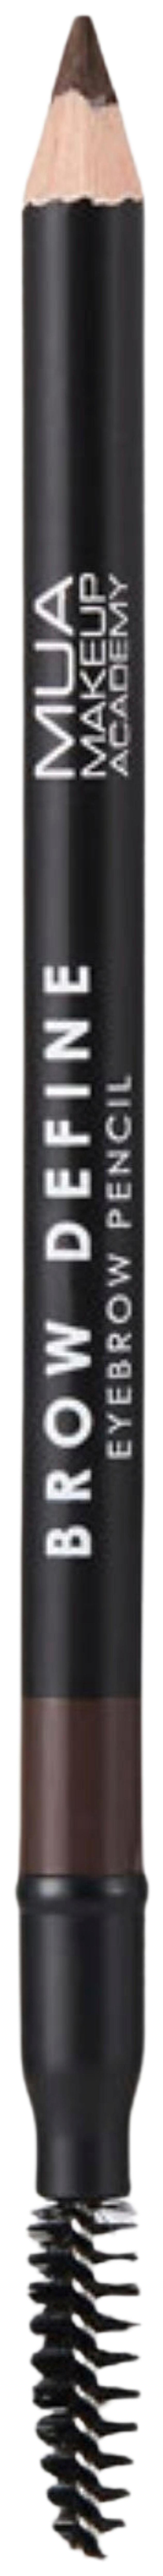 MUA Make Up Academy Brow Define Eyebrow Pencil 1,2 g Dark Brown kulmakynä